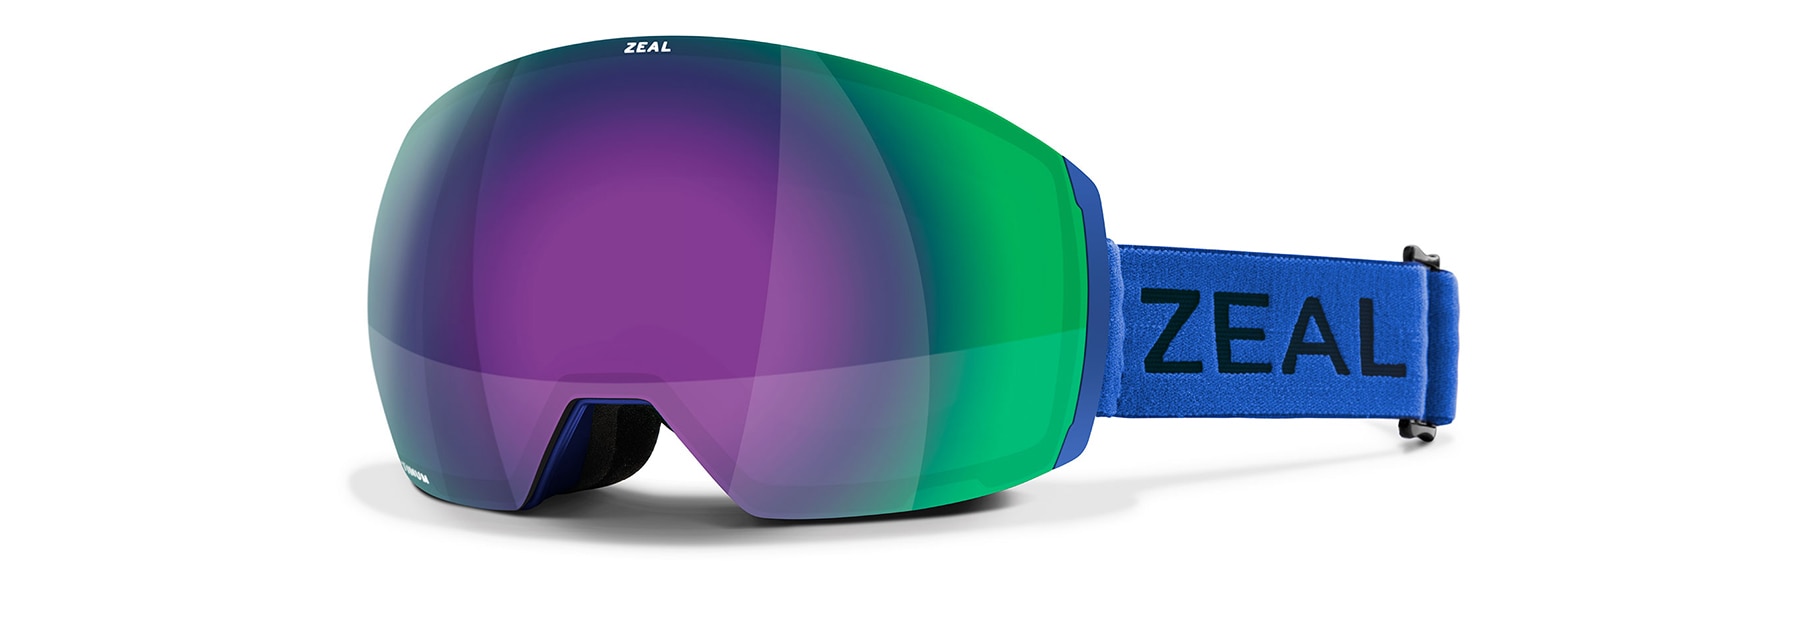 Shop PORTAL XL (Z1611) Goggles by Zeal | Zeal Optics